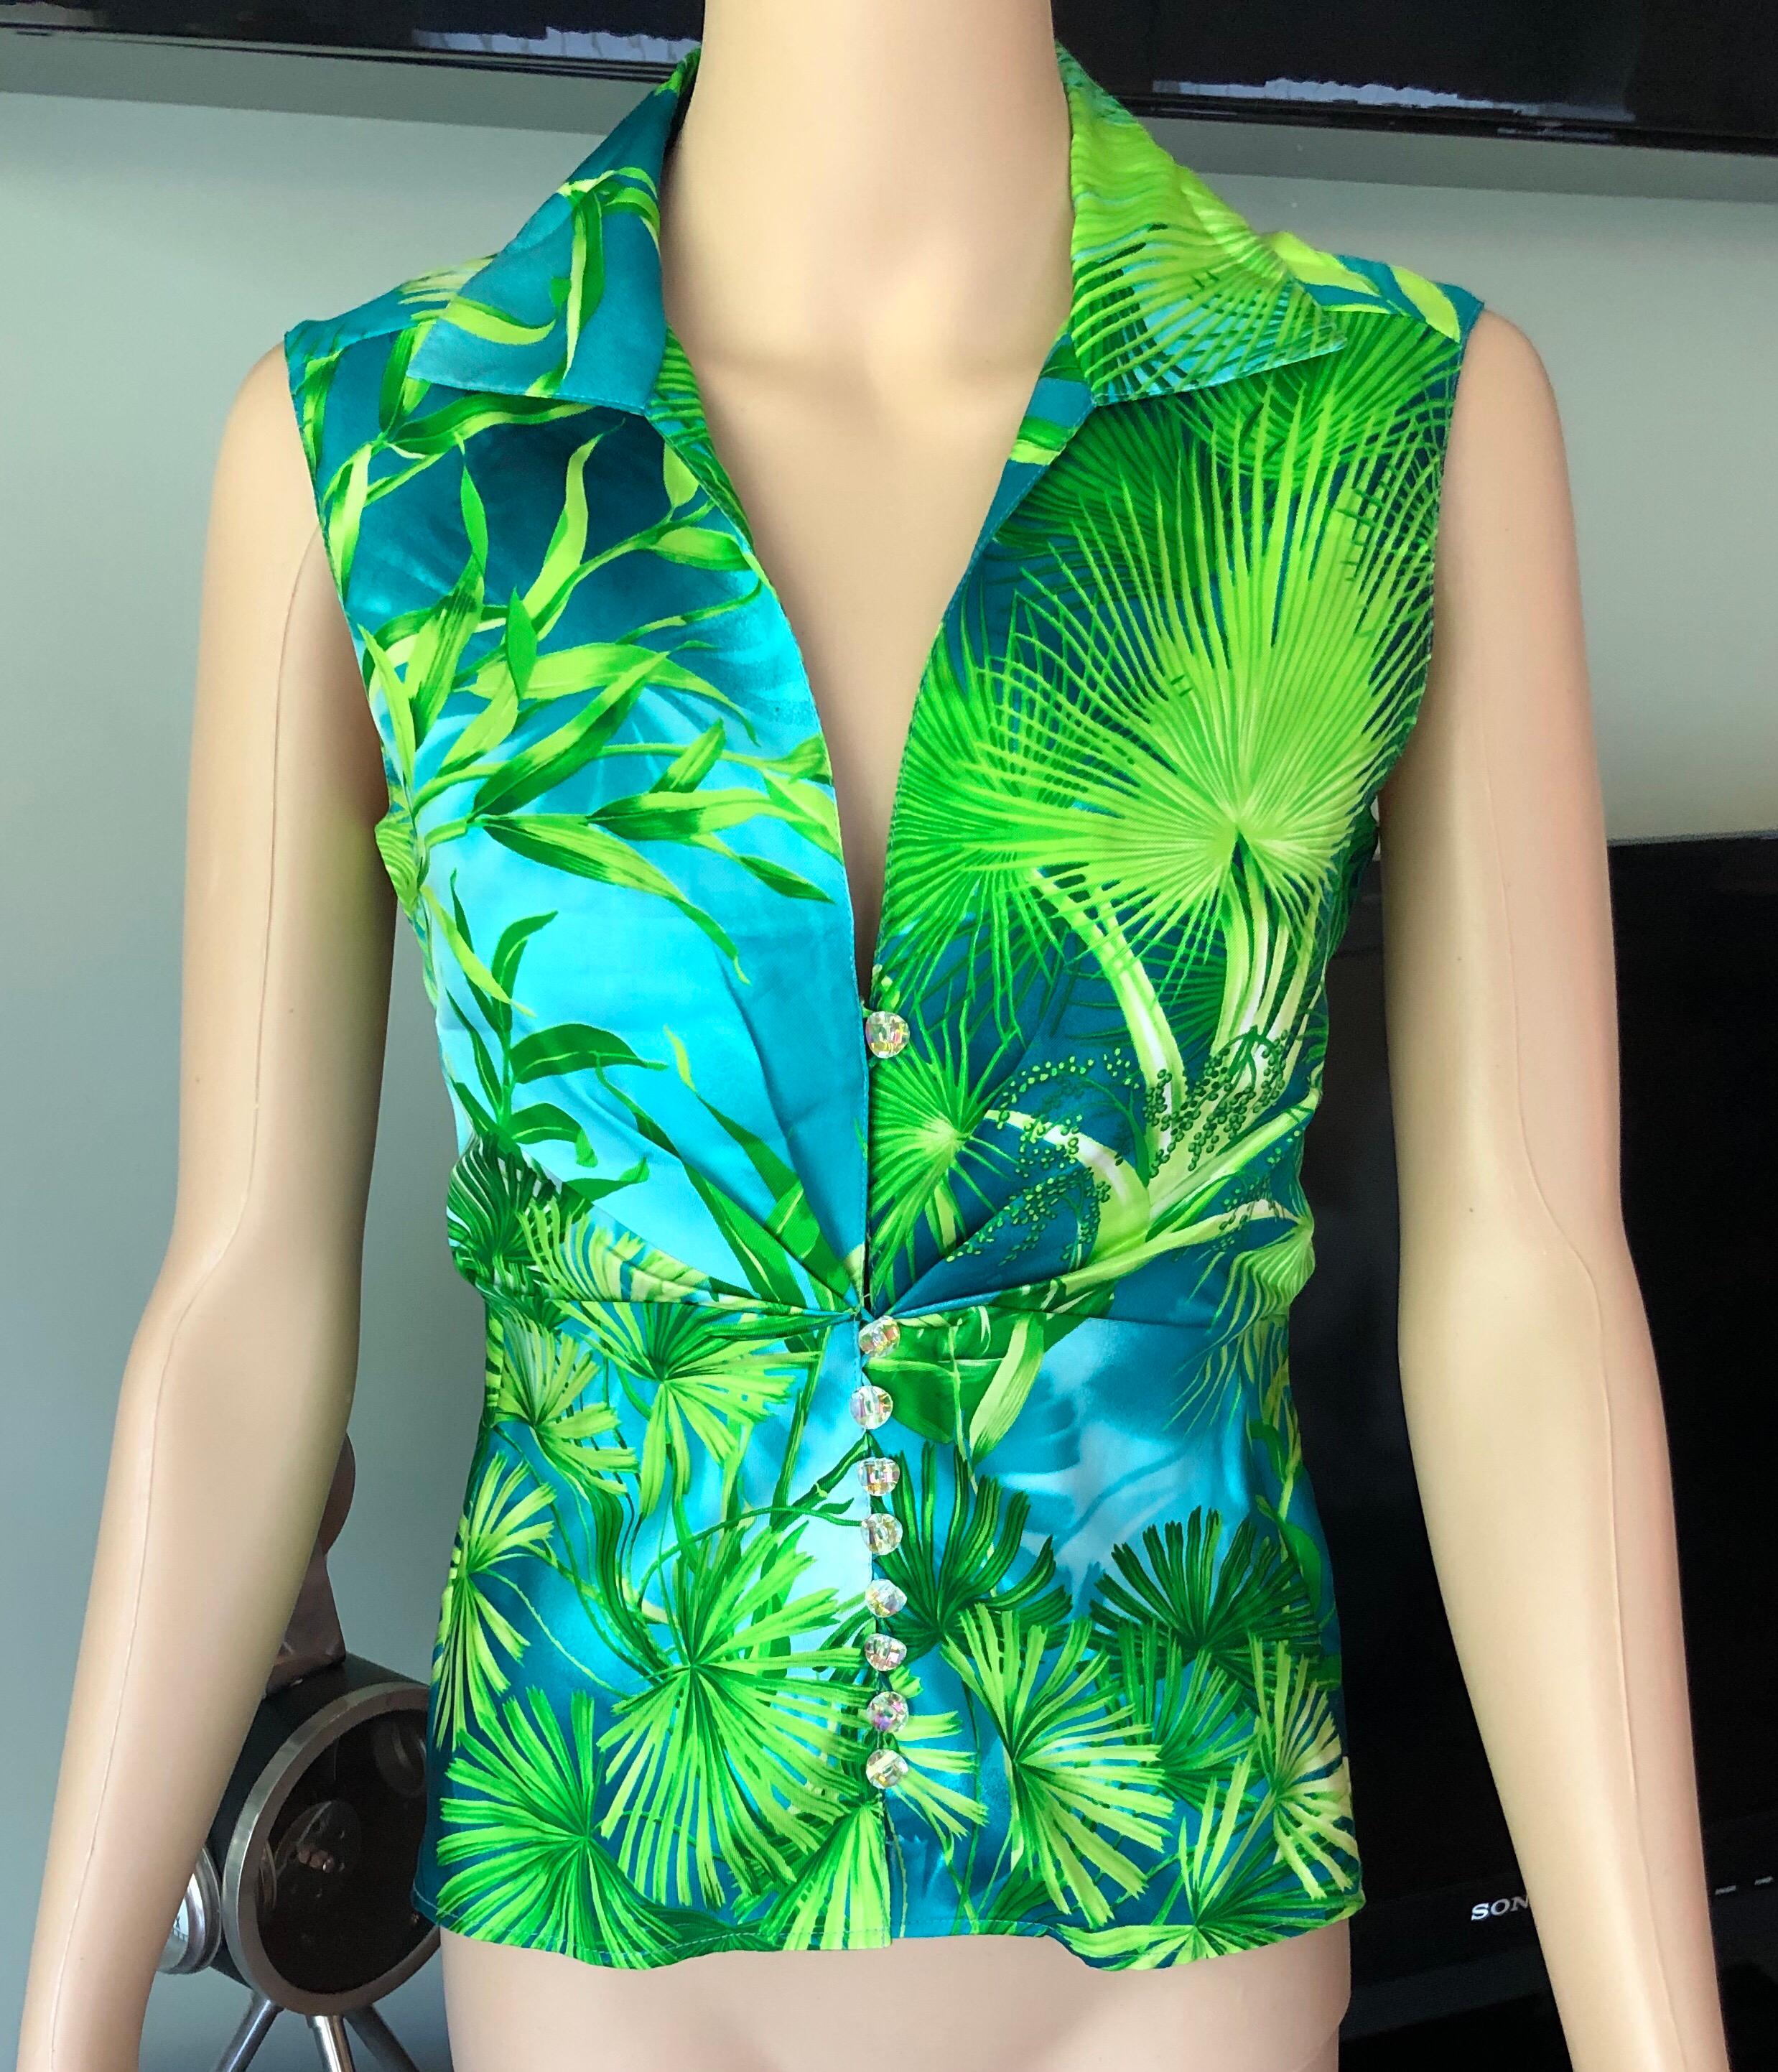 Green Gianni Versace S/S 2000 Runway Plunging Neckline Tropical Print Silk Shirt Top